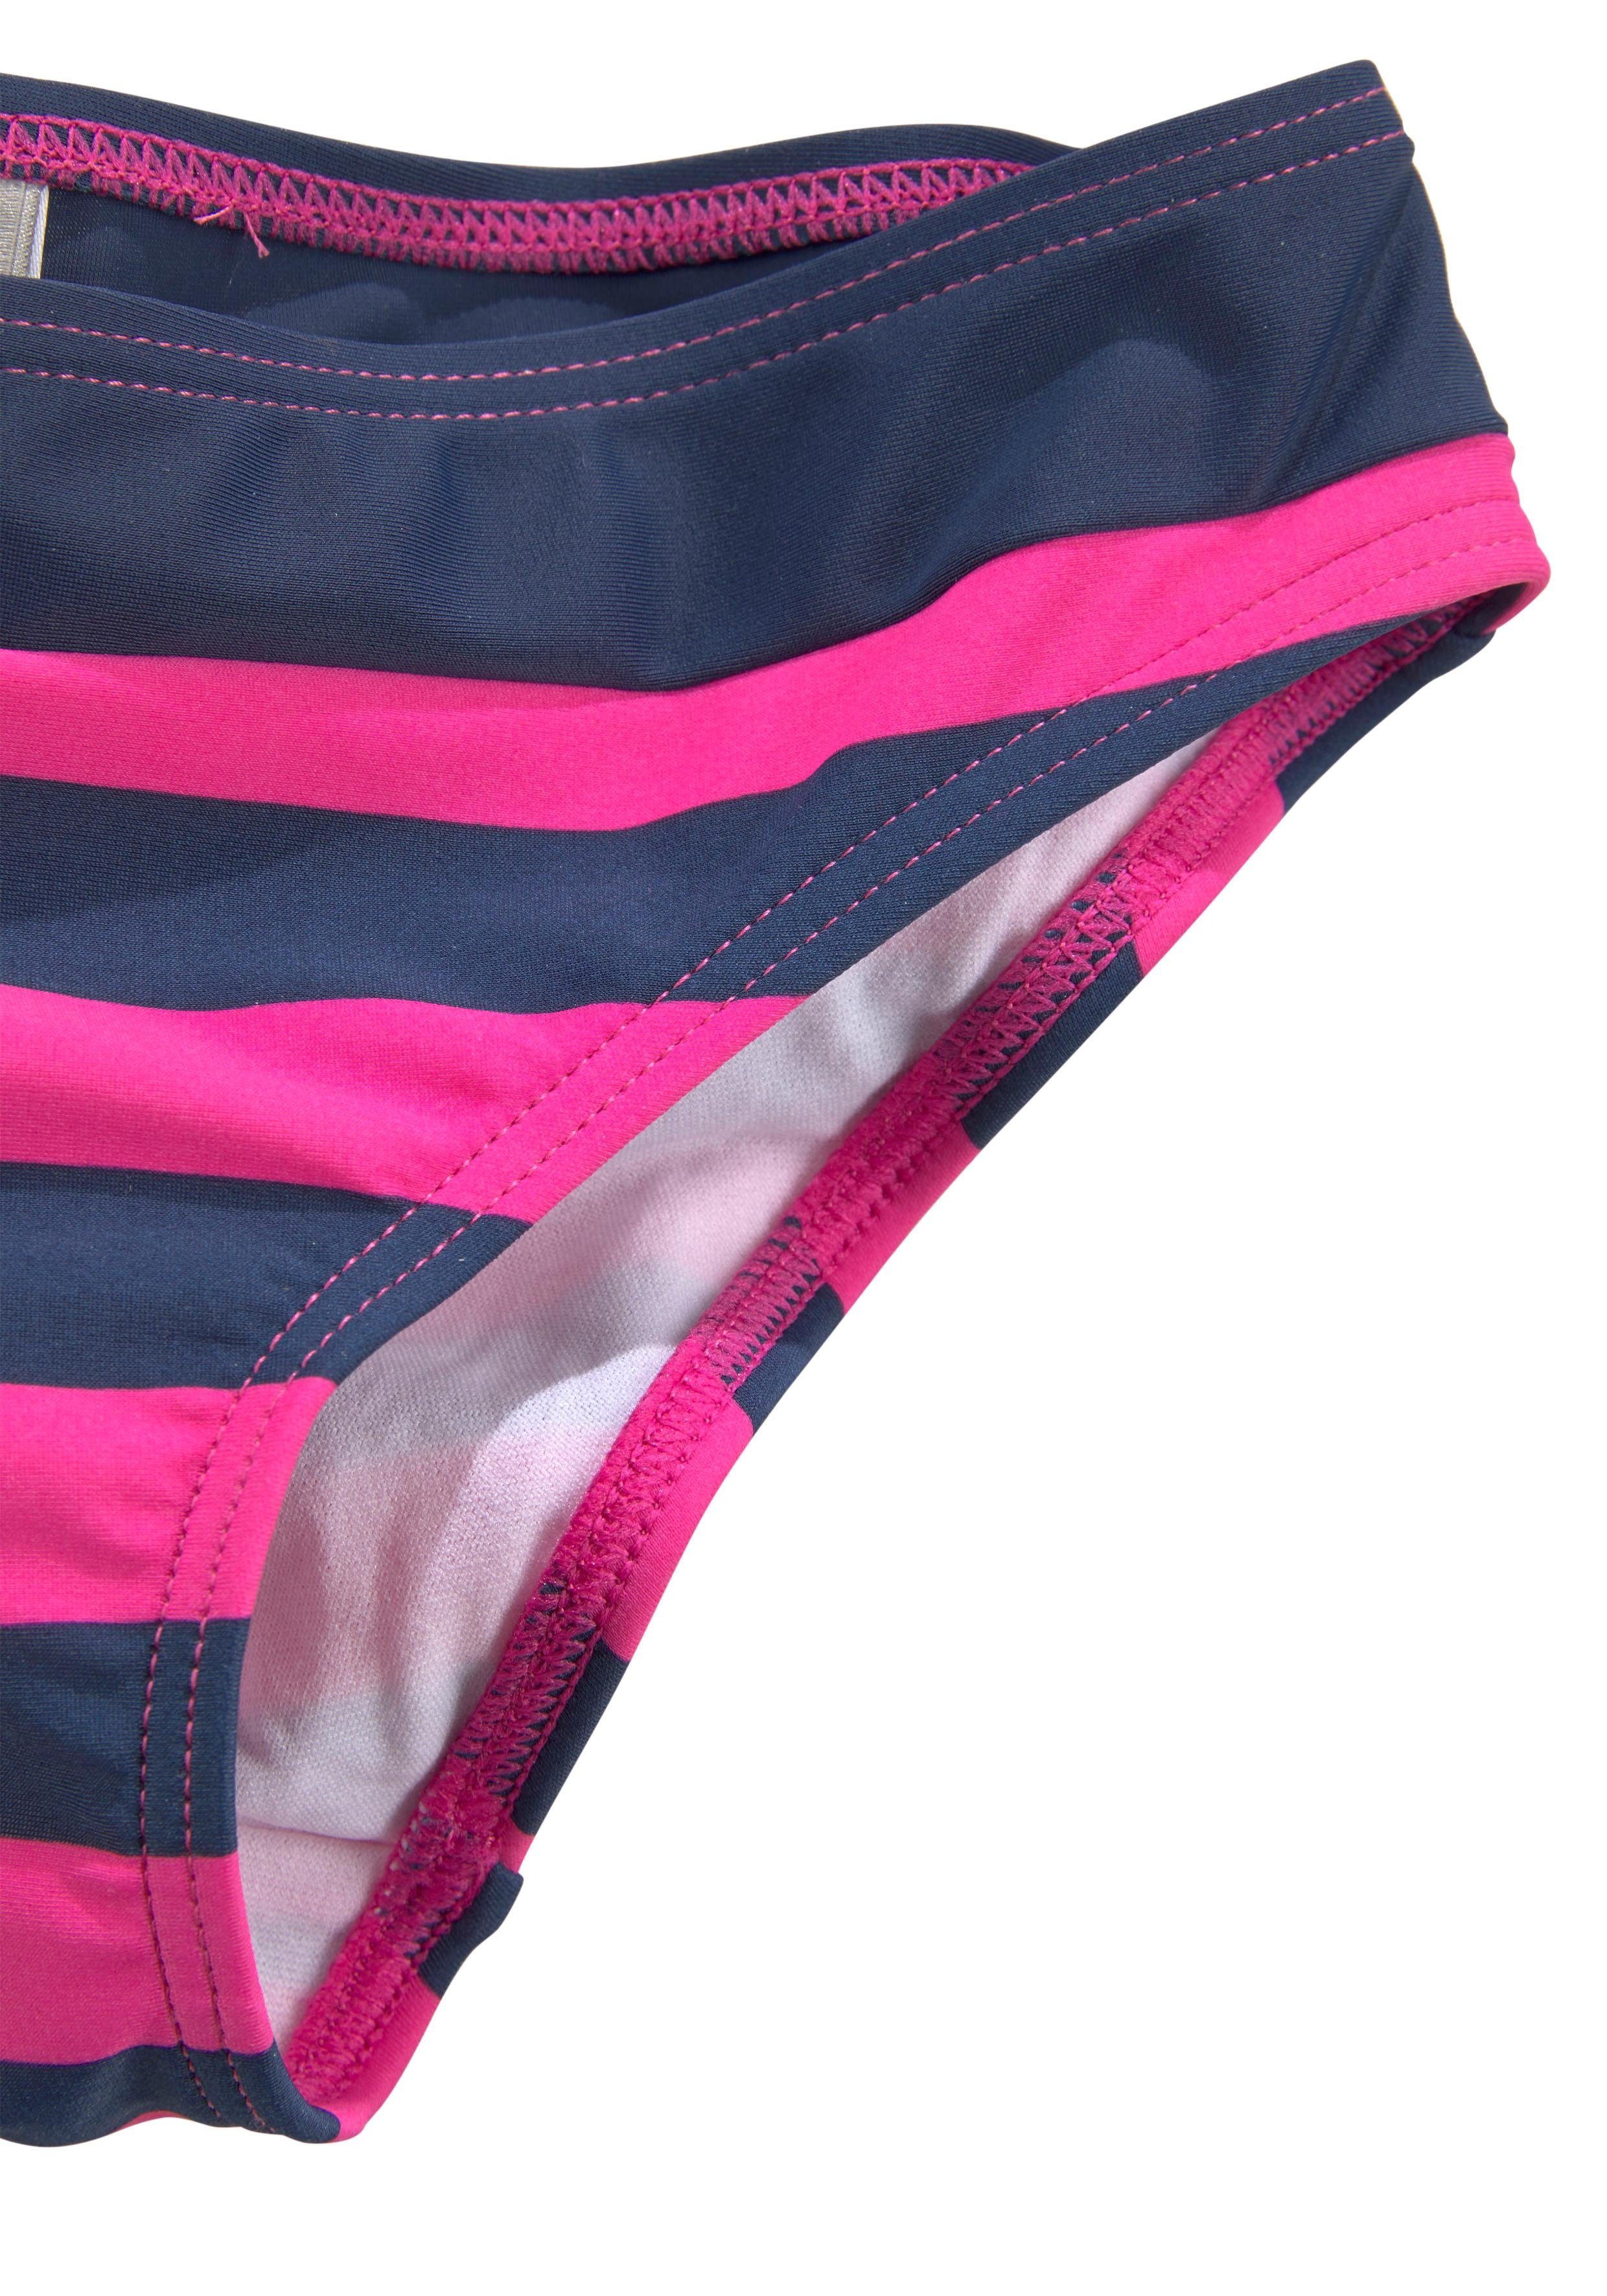 Bench. Bandeau-Bikini Logoprint großem mit pink-marine